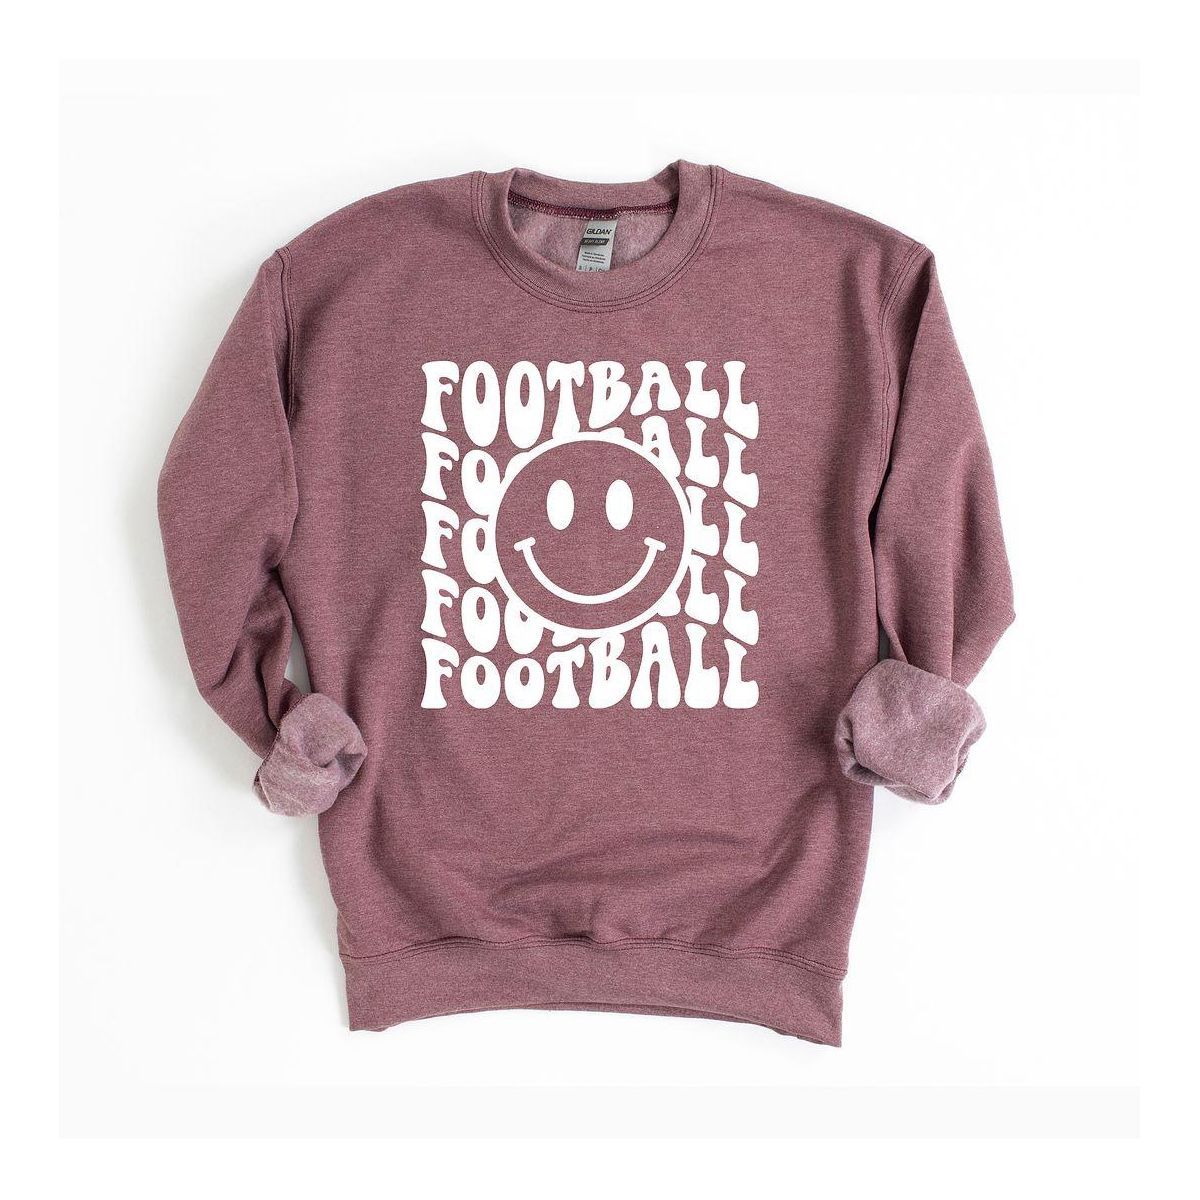 Simply Sage Market Women's Graphic Sweatshirt Football Smiley Face | Target